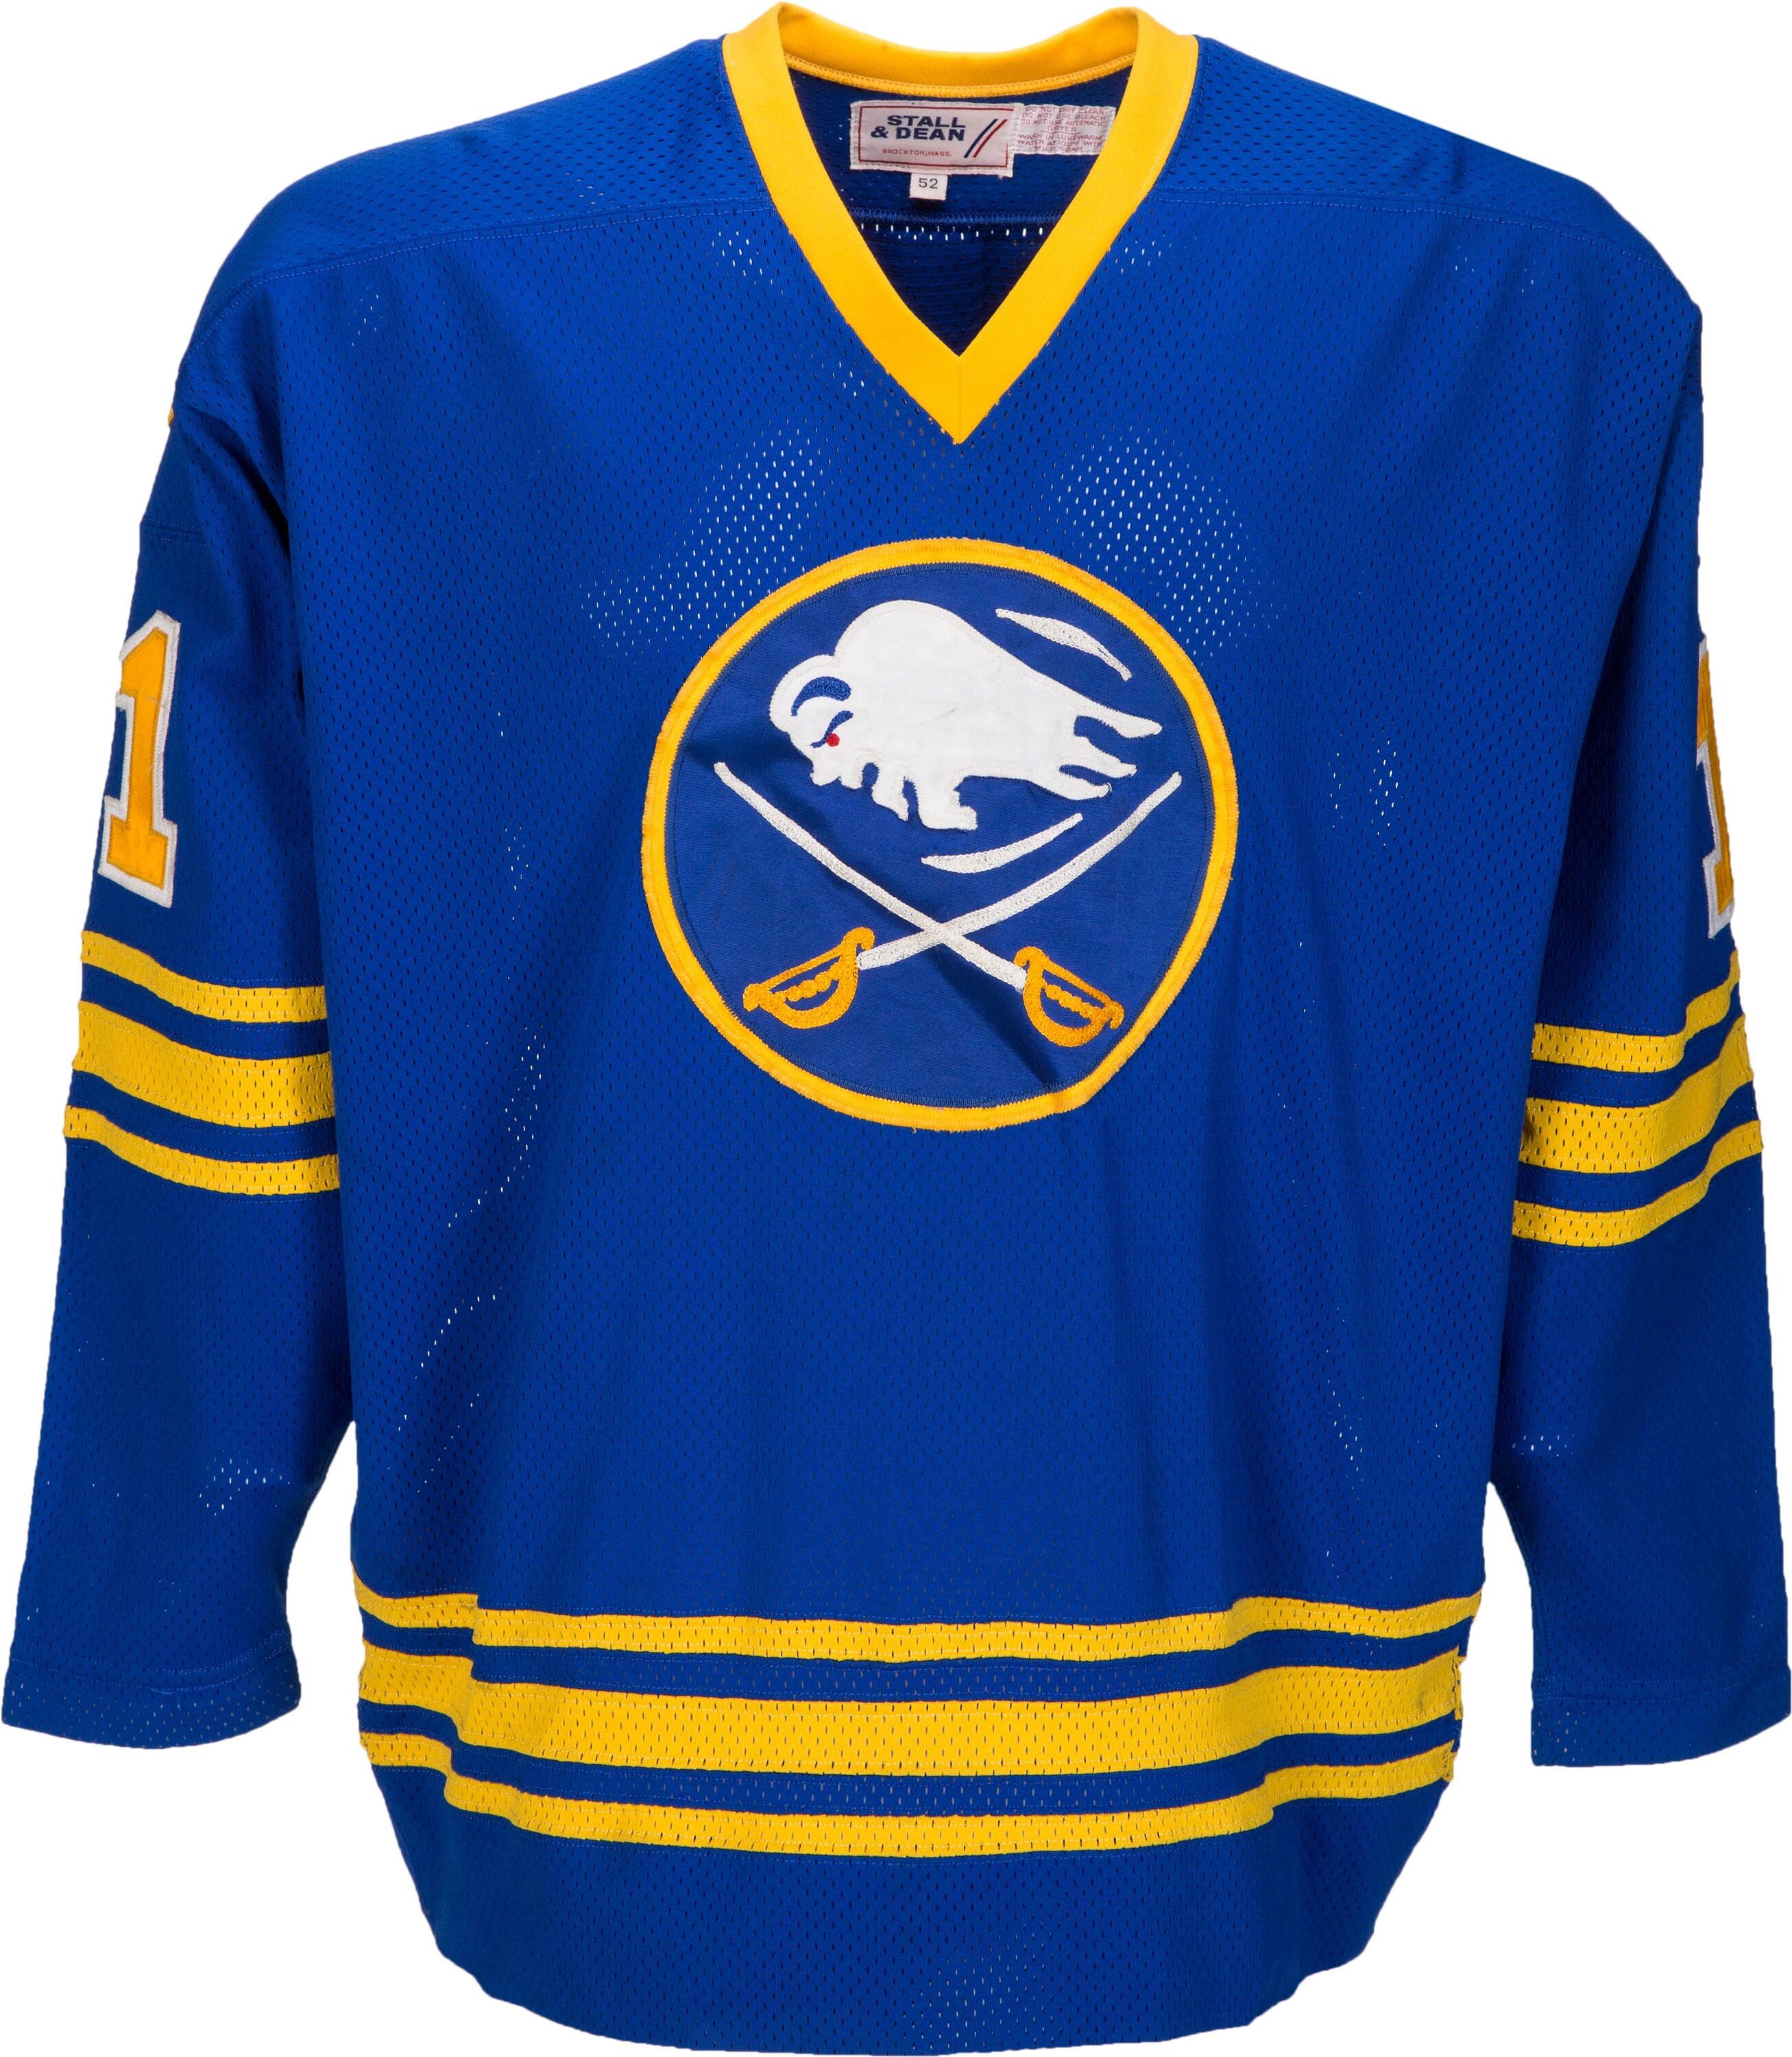 NHL Buffalo Sabres 2000-01 uniform and jersey original art